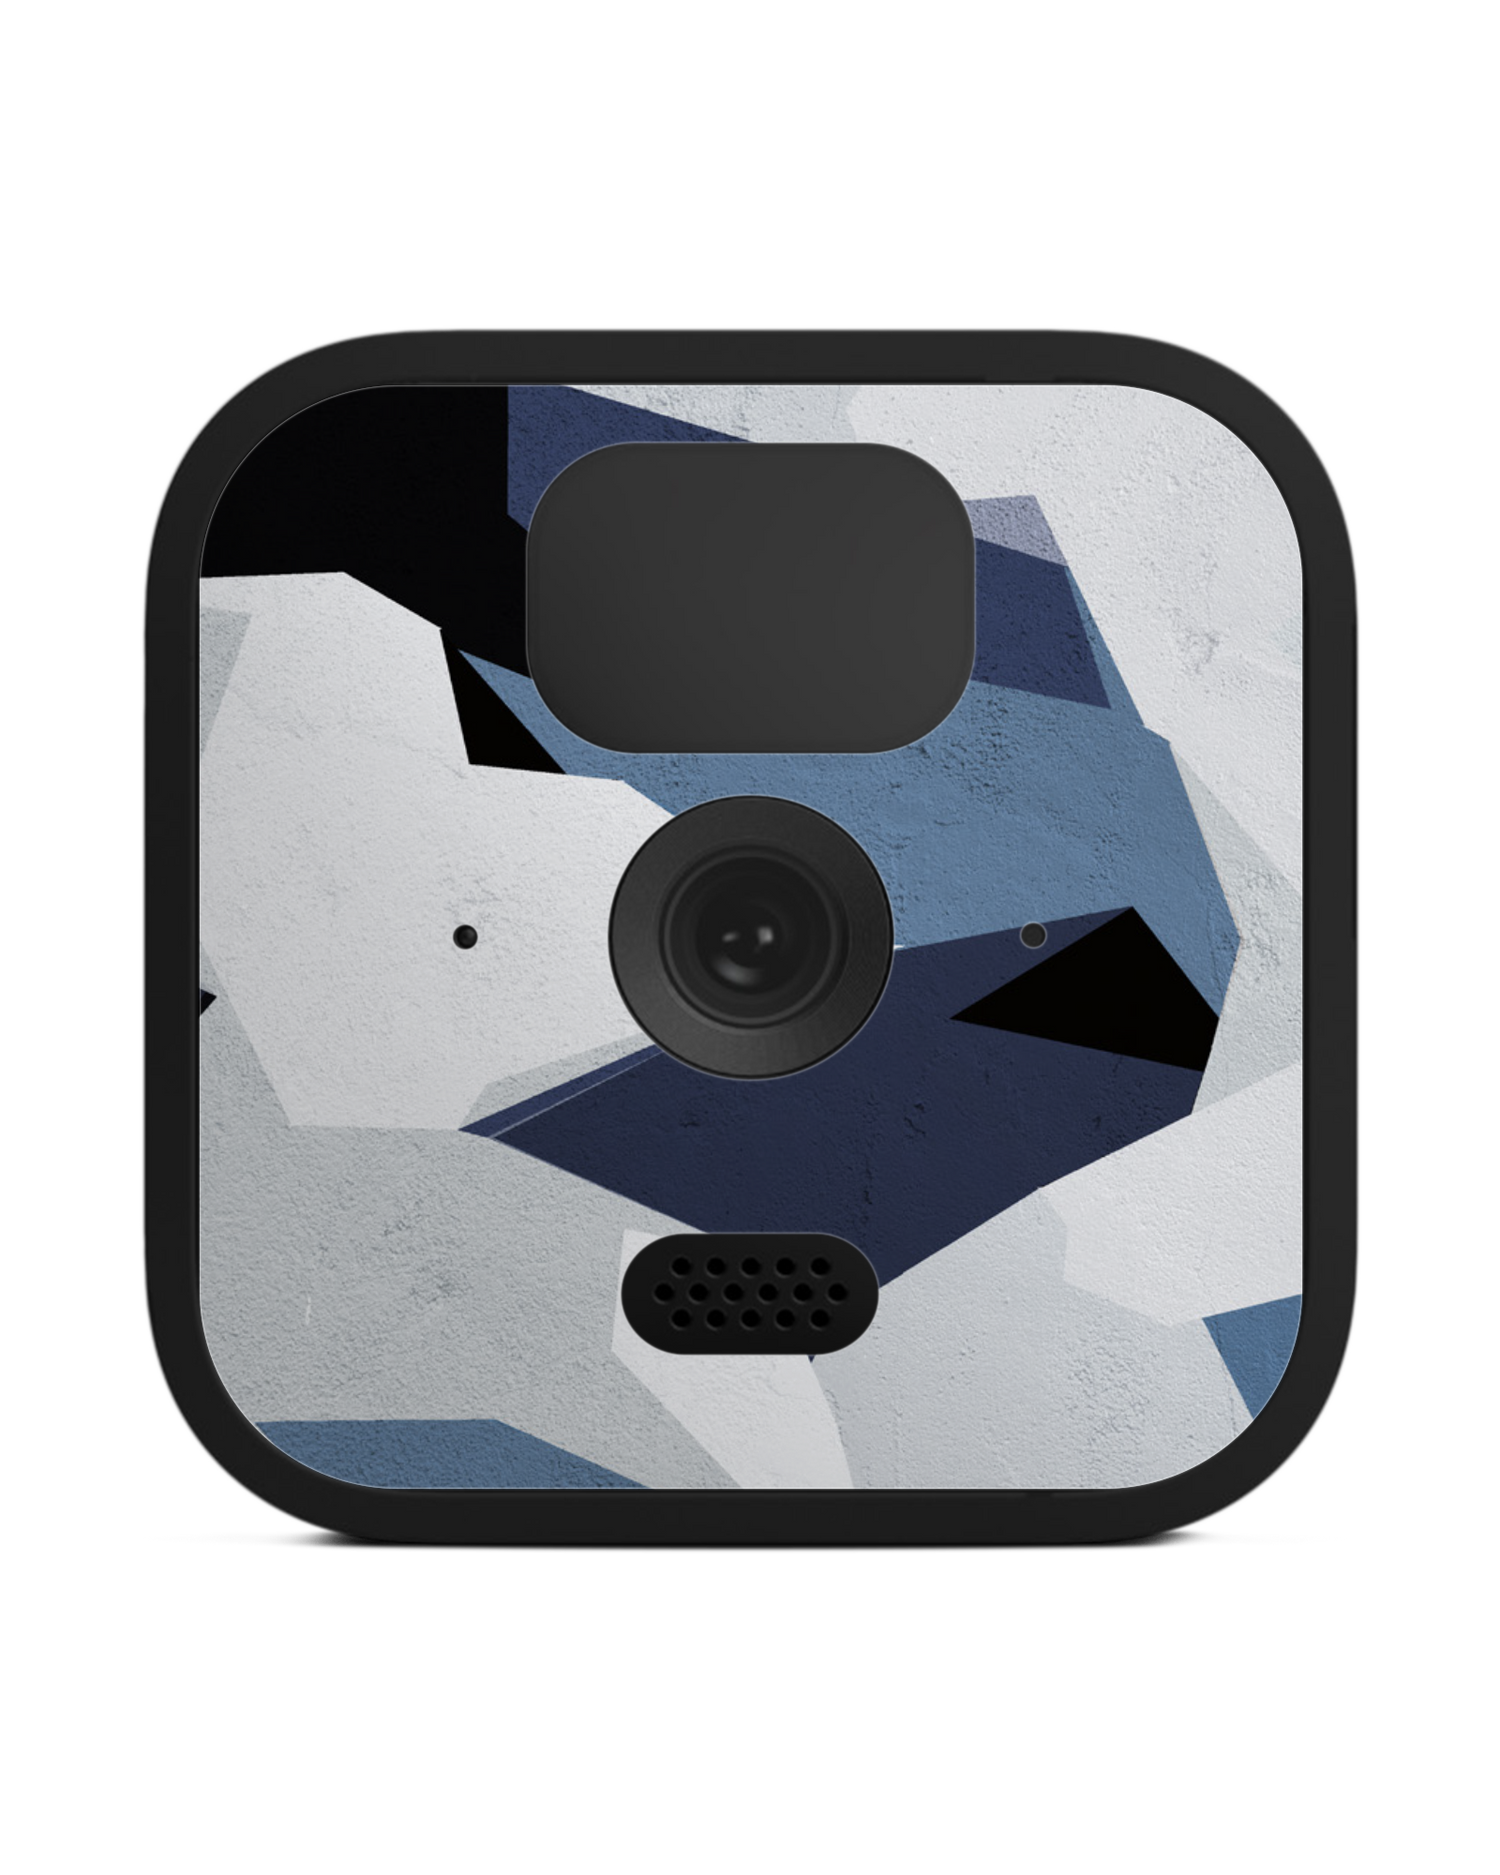 Geometric Camo Blue Kamera Aufkleber Blink Outdoor (2020): Vorderansicht